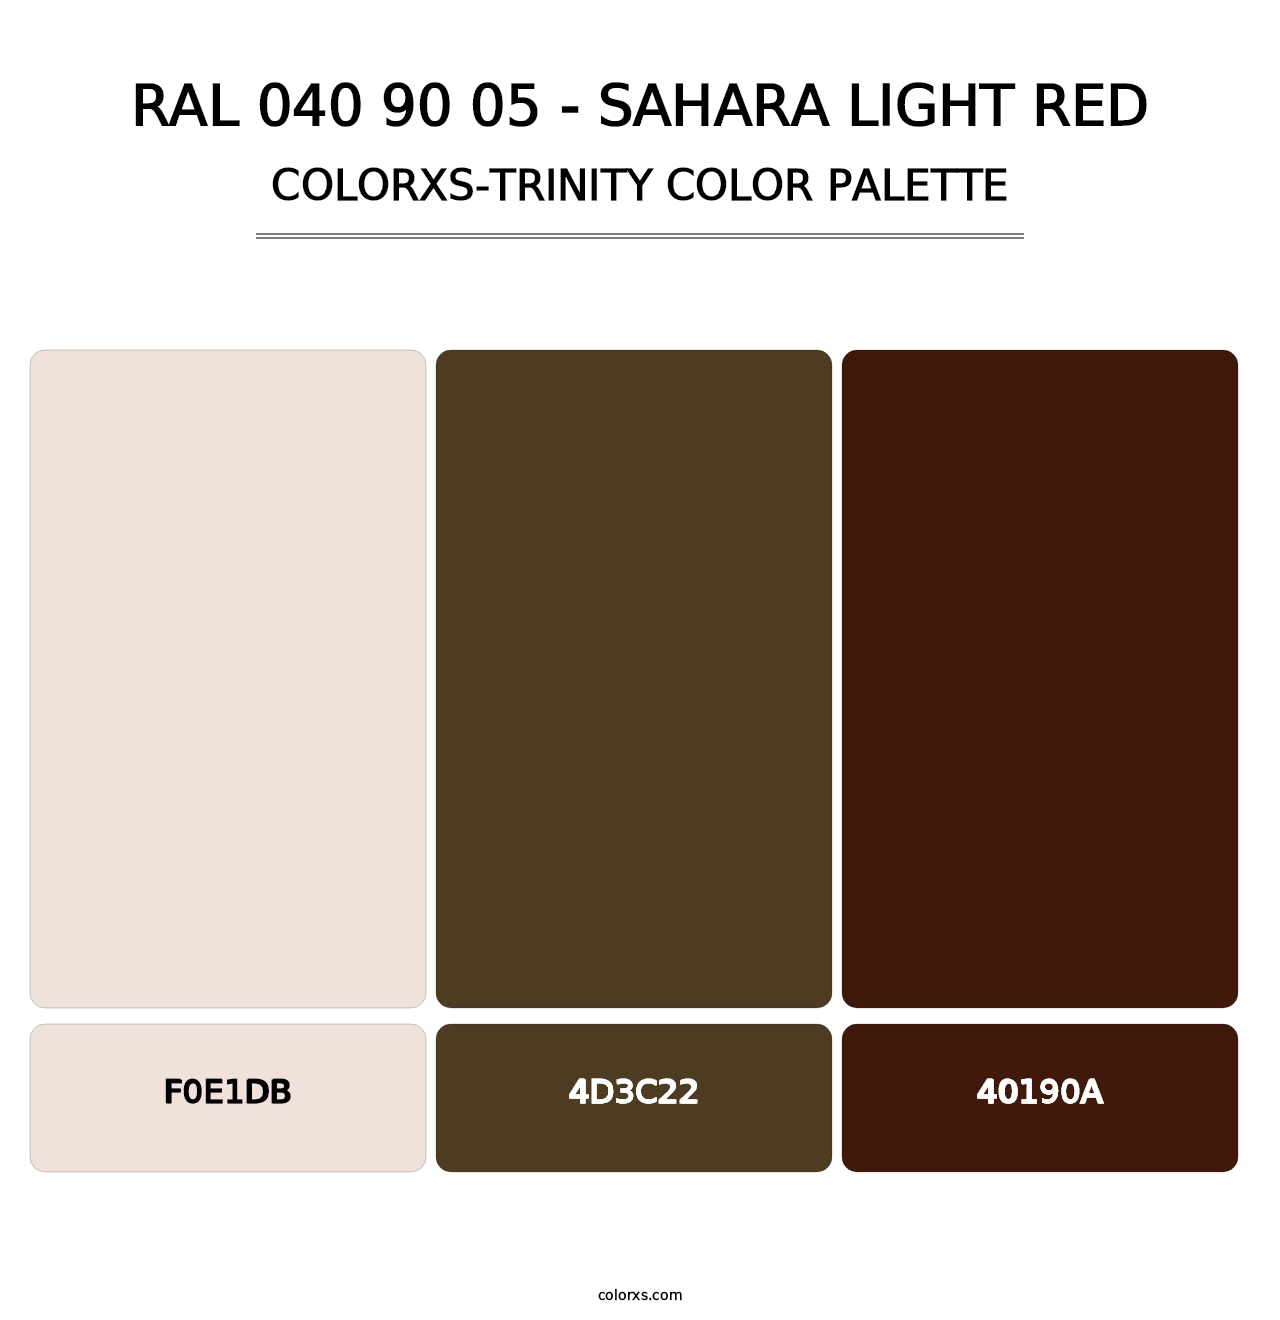 RAL 040 90 05 - Sahara Light Red - Colorxs Trinity Palette